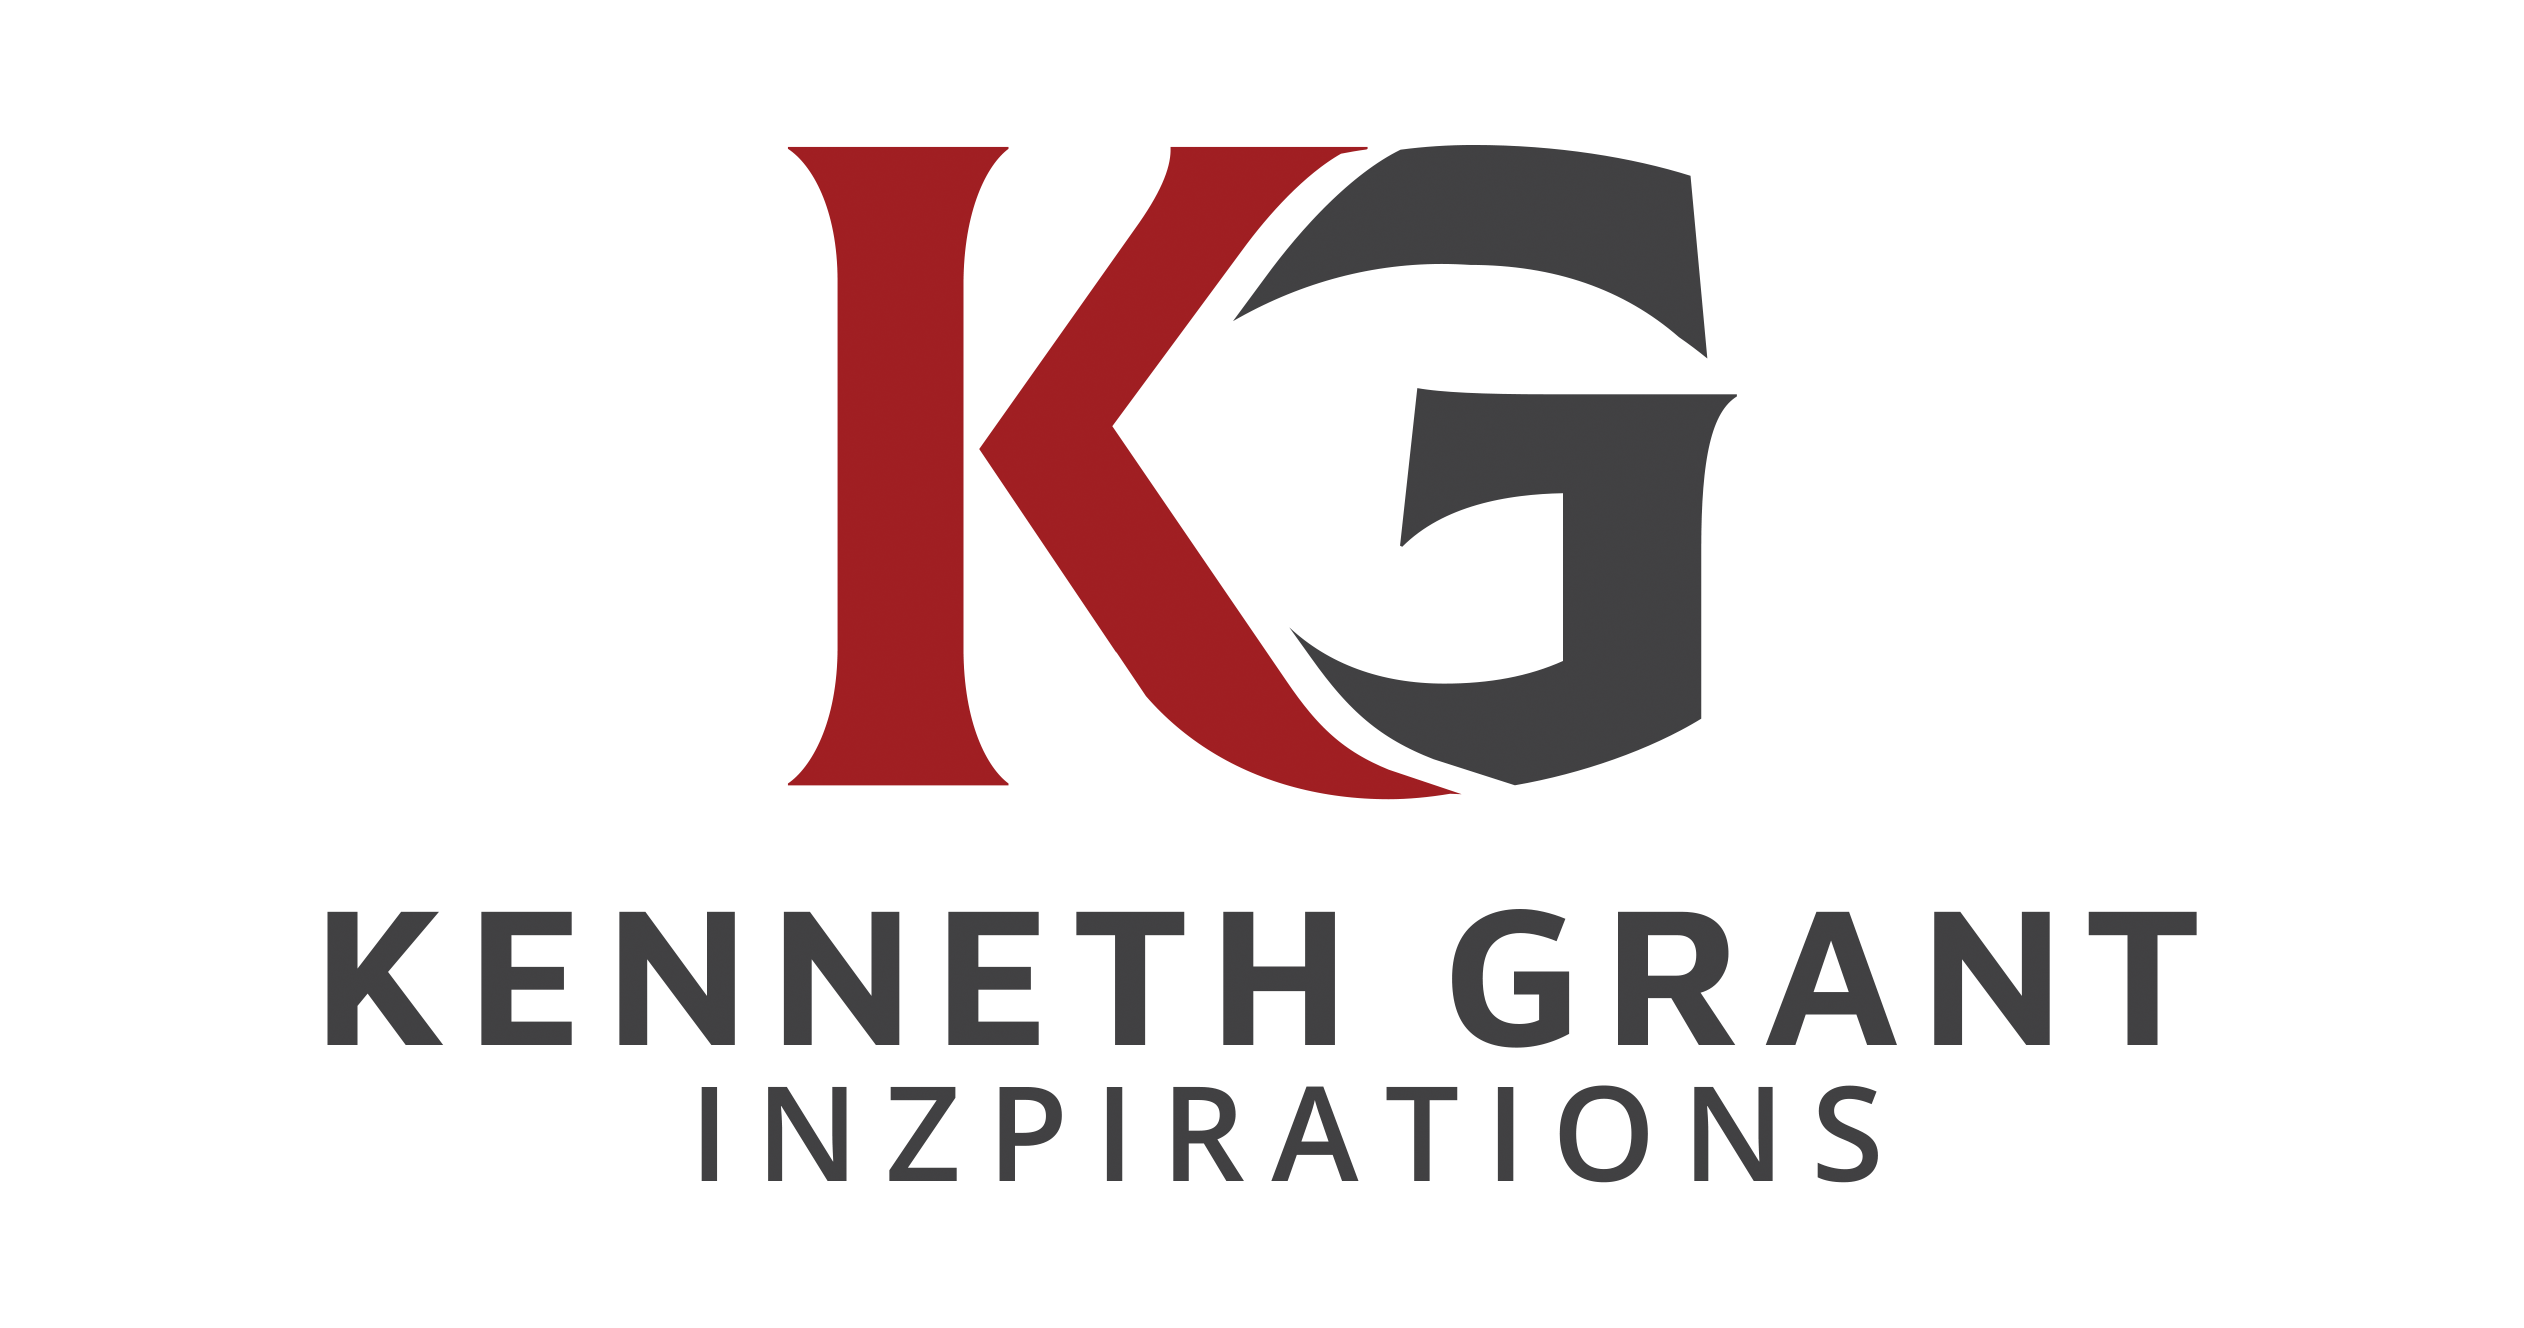 Kenneth Grant Inzpirations